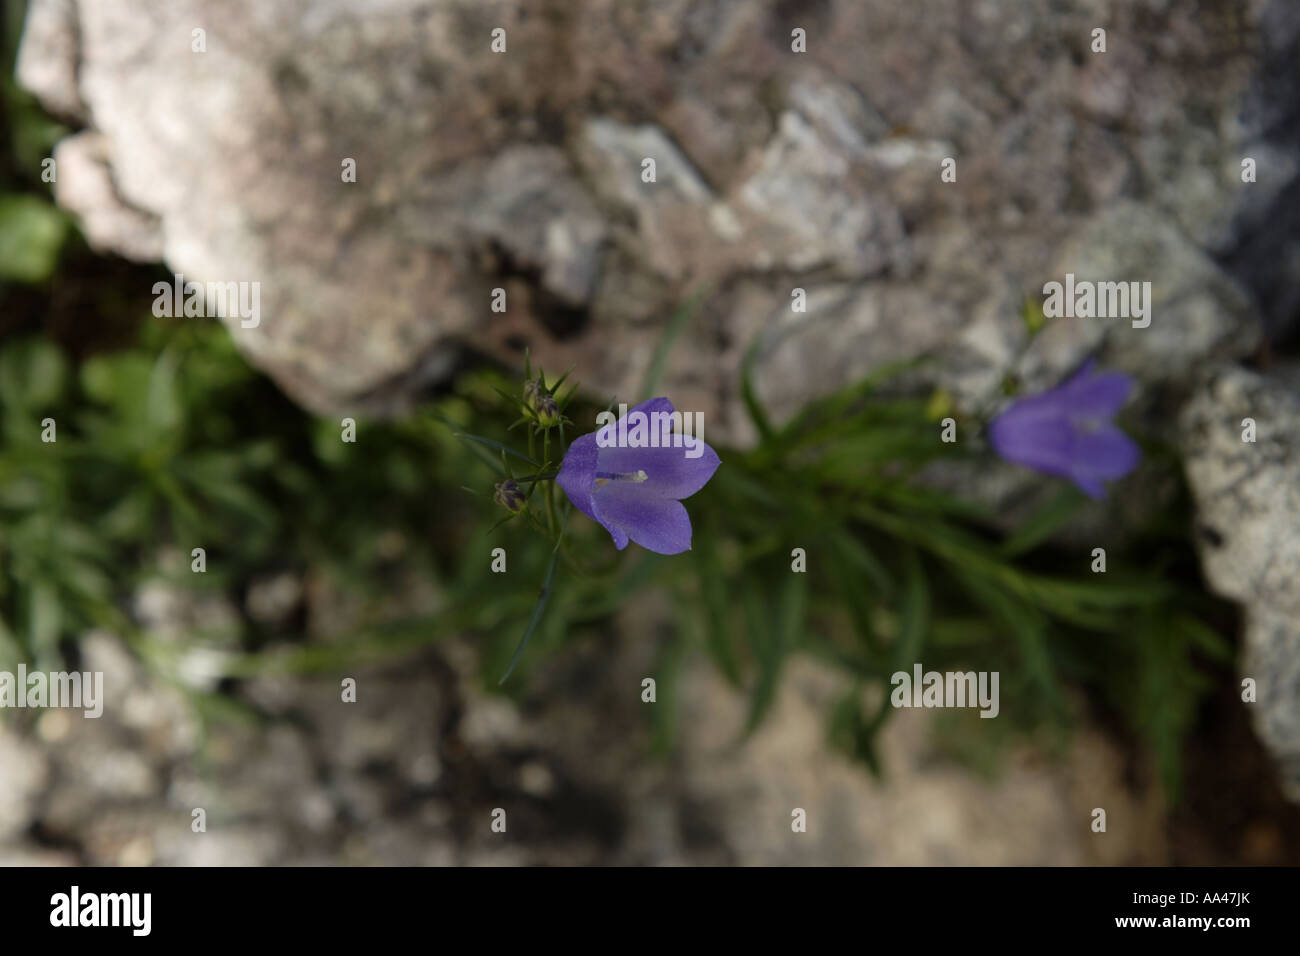 Dolomite region, Italy: Close-up of a Bellflower (Campanula Raineri) among rocks Stock Photo